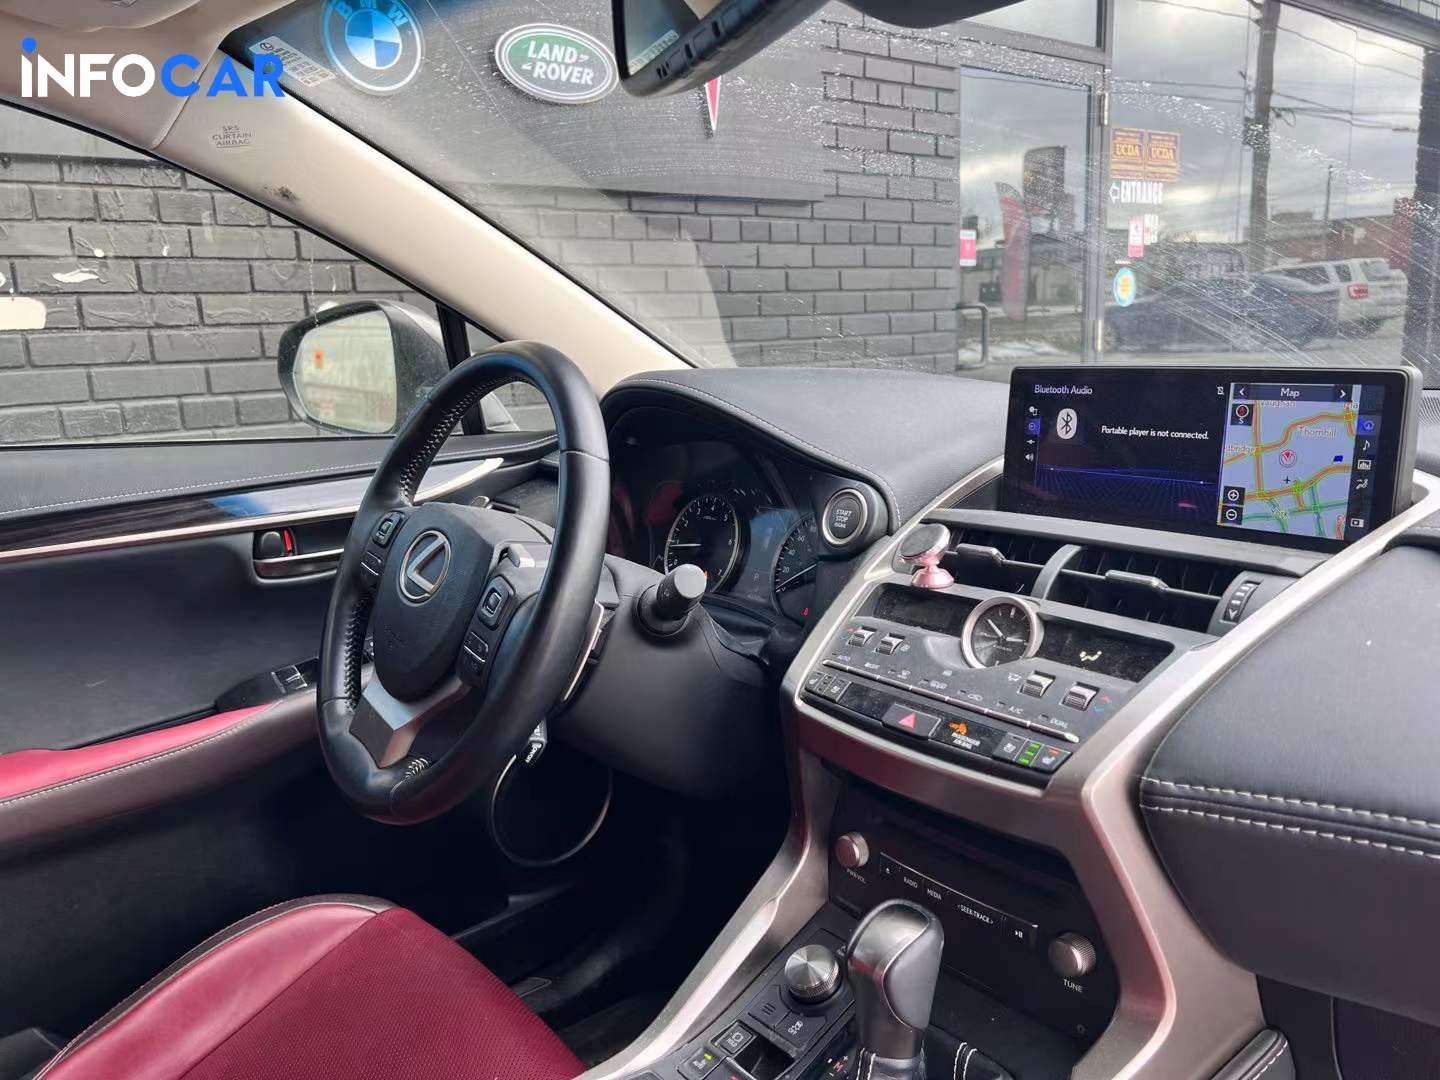 2019 Lexus NX 300 Luxury - INFOCAR - Toronto Auto Trading Platform